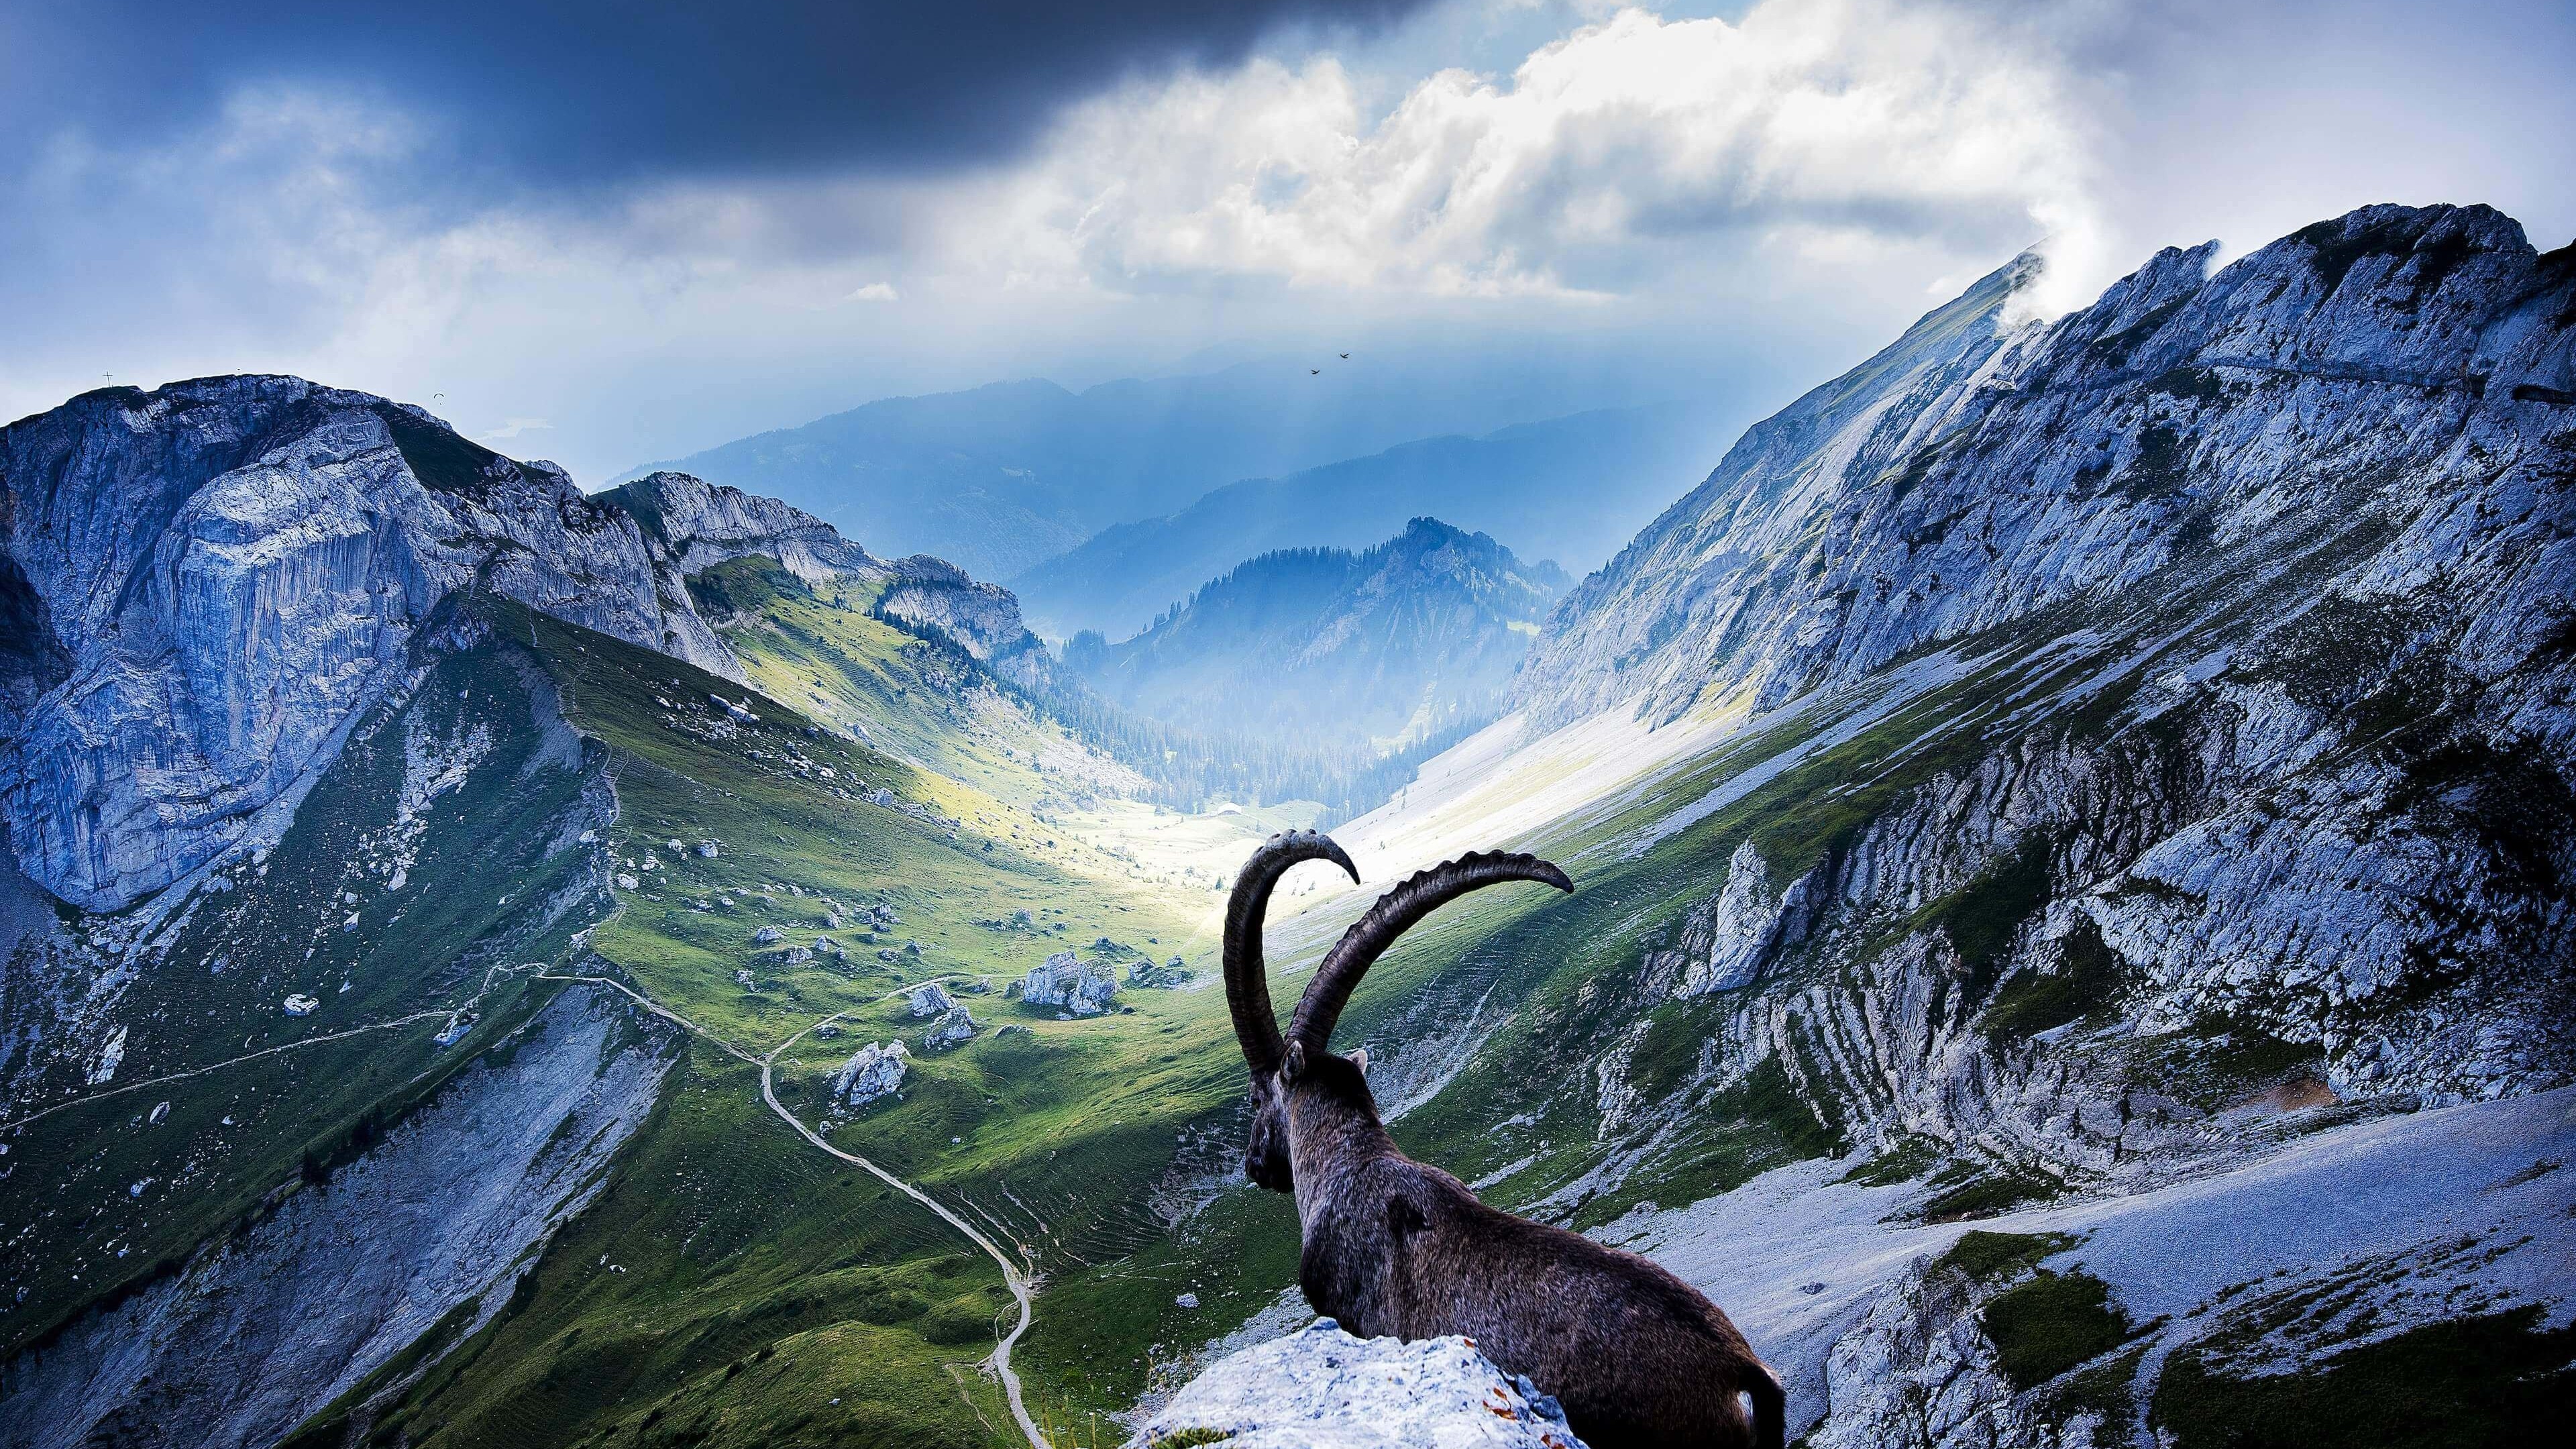 Goat at Pilatus, Switzerland Wallpaper for Desktop 4K 3840x2160